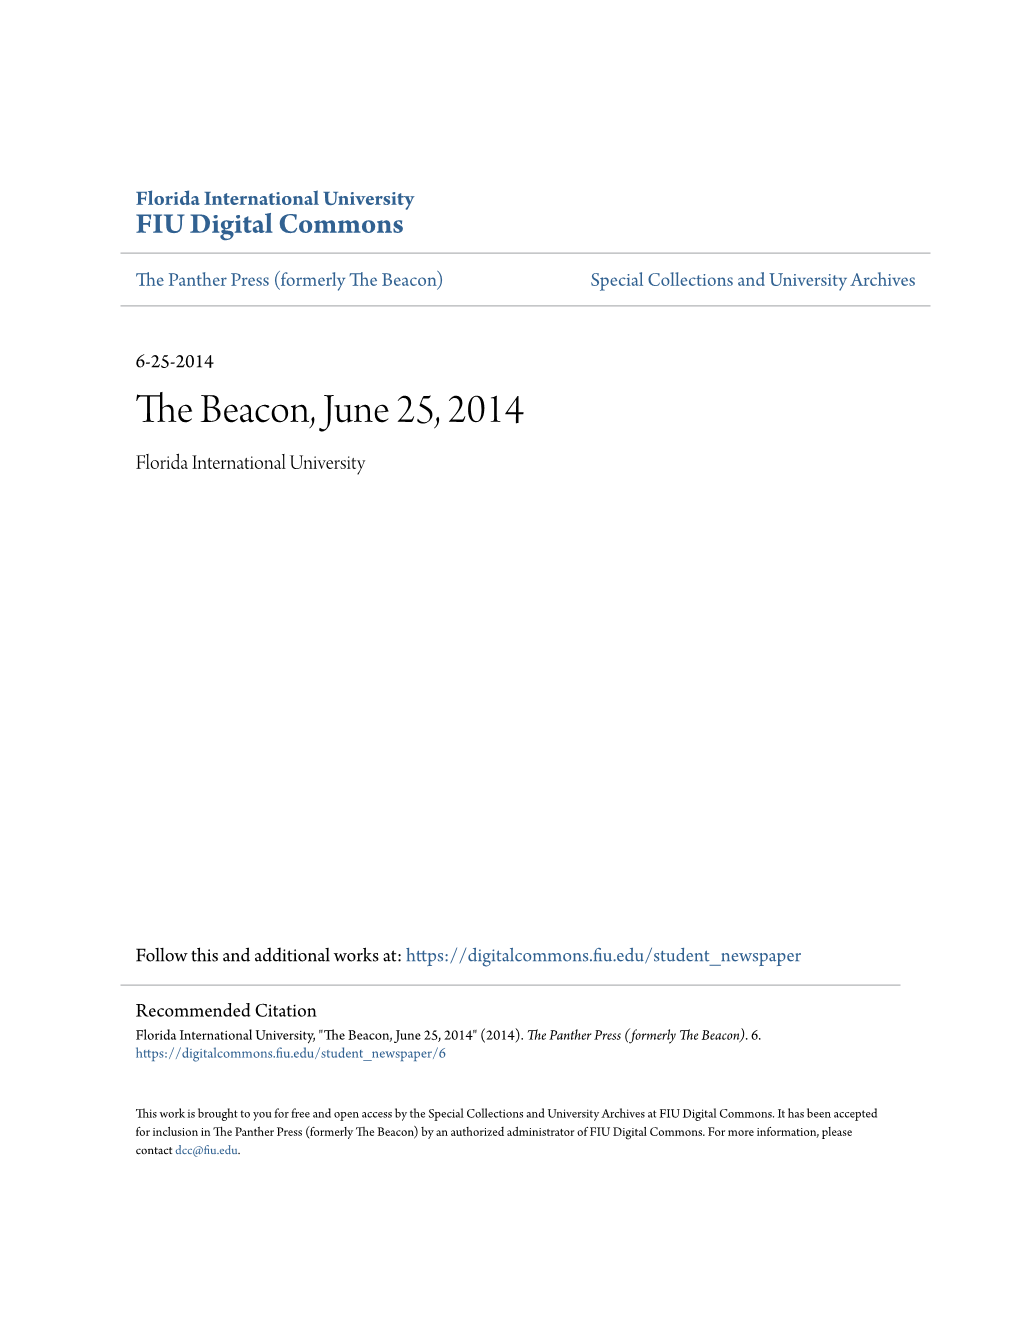 The Beacon, June 25, 2014 Florida International University